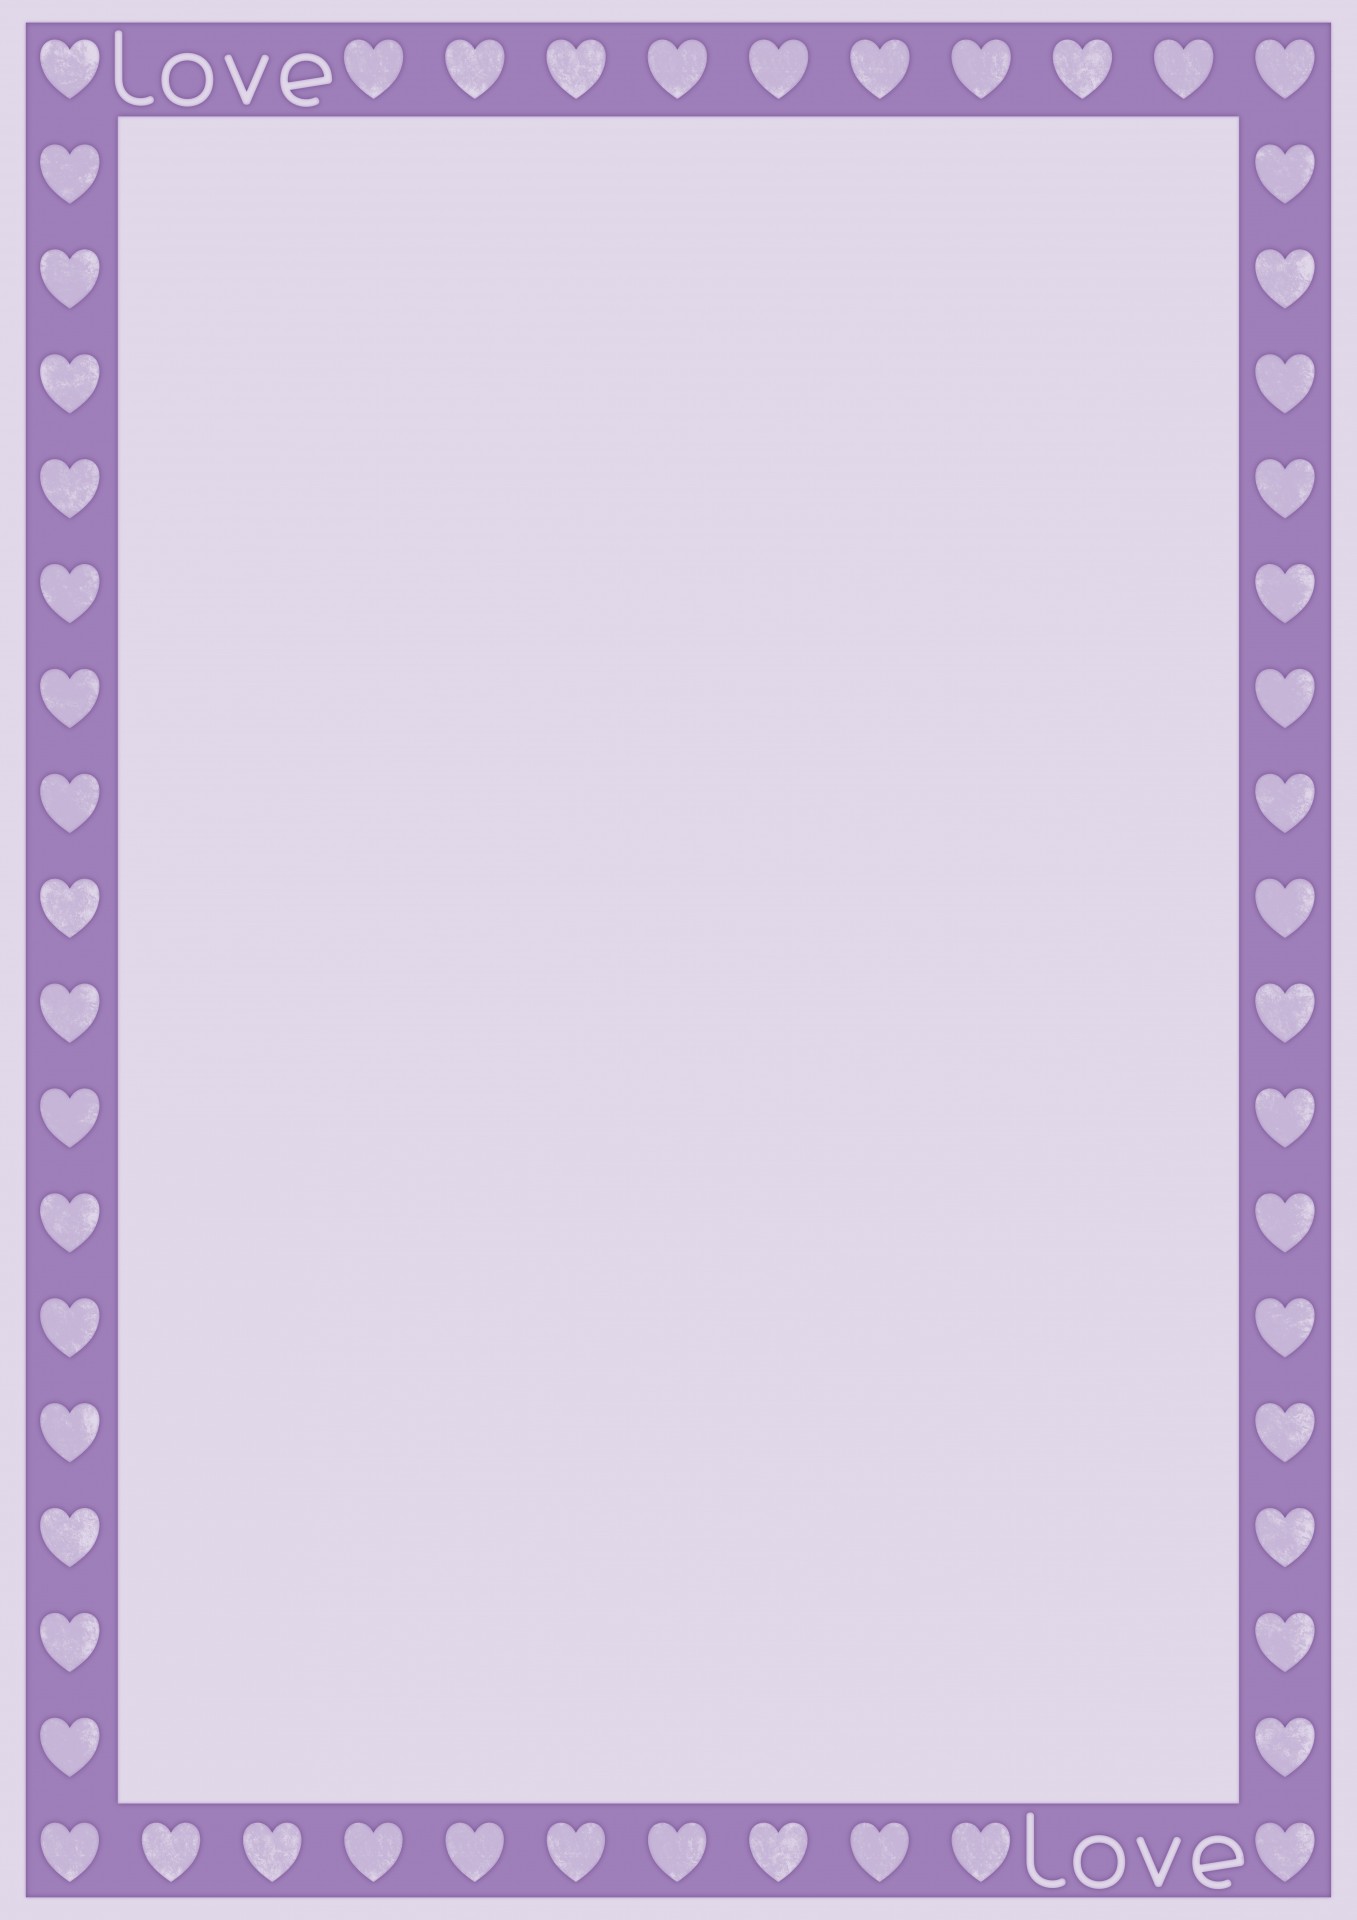 Love heart border template